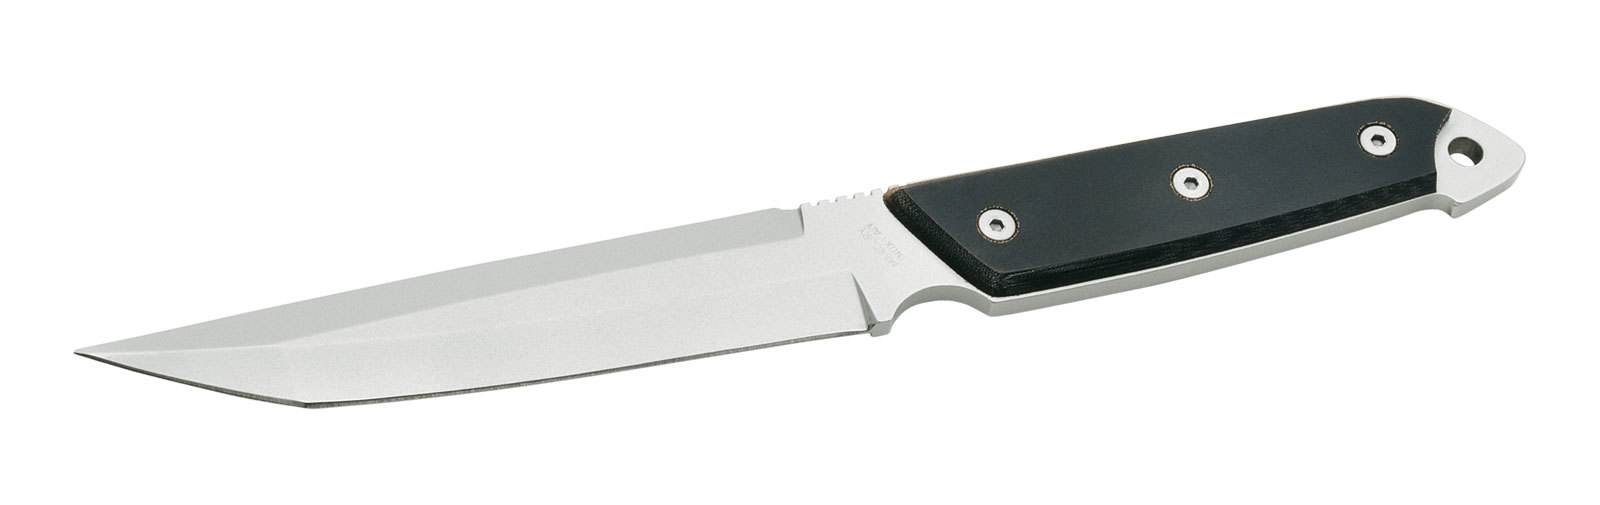 Нож с фиксированным клинком Remington Комбат (Mercury Combat) MY\9221-22 - фото 2